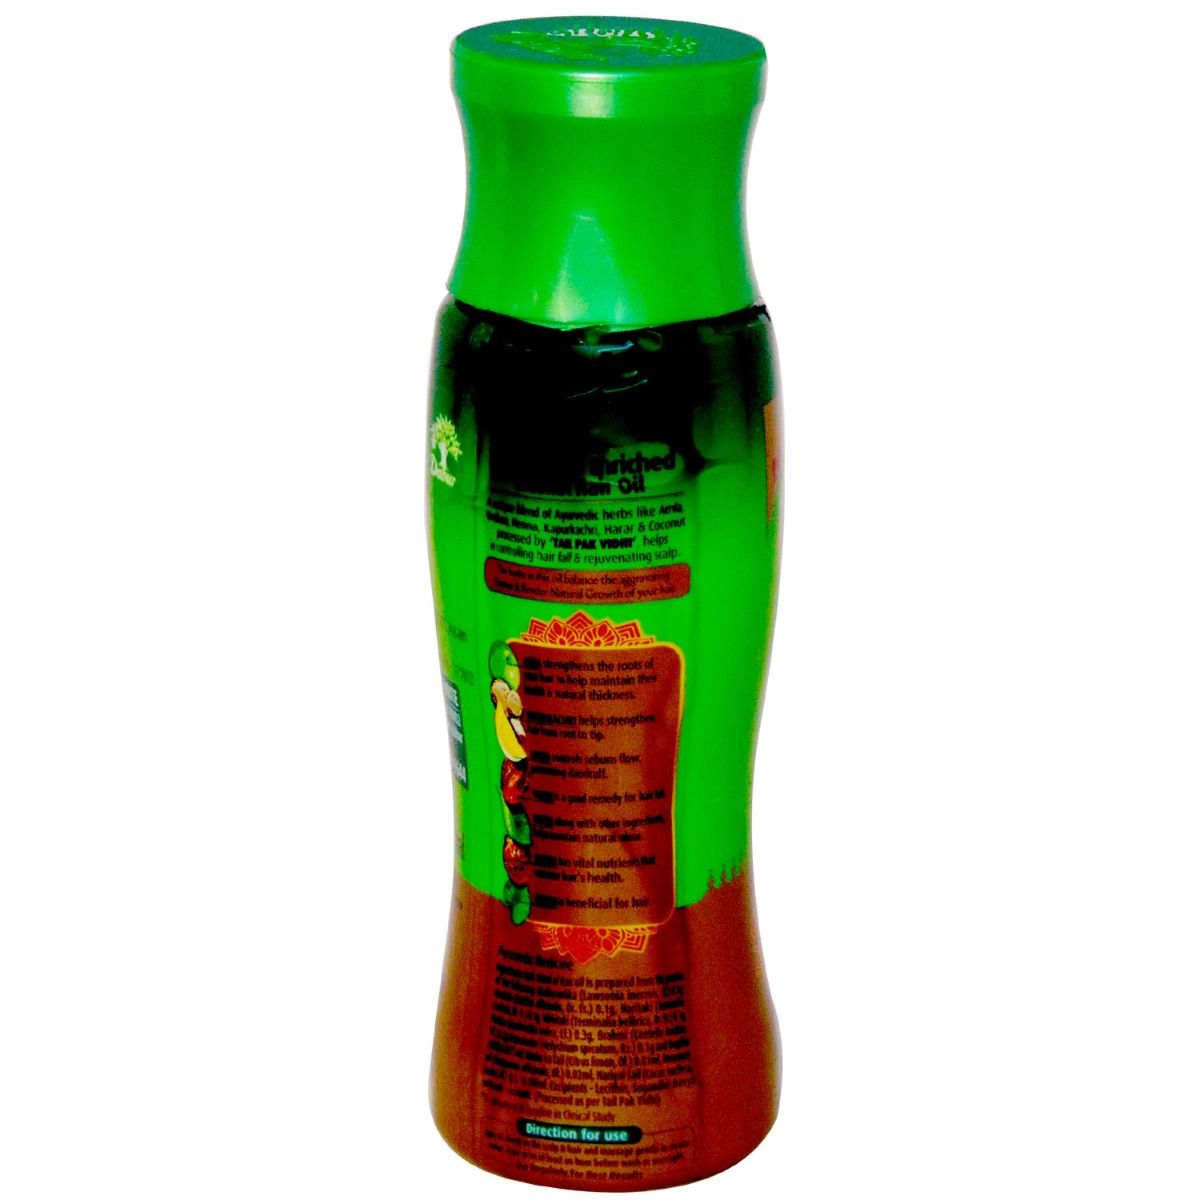 Dabur Vatika Enriched Coconut Hair Oil, 150 ml, Pack of 1 